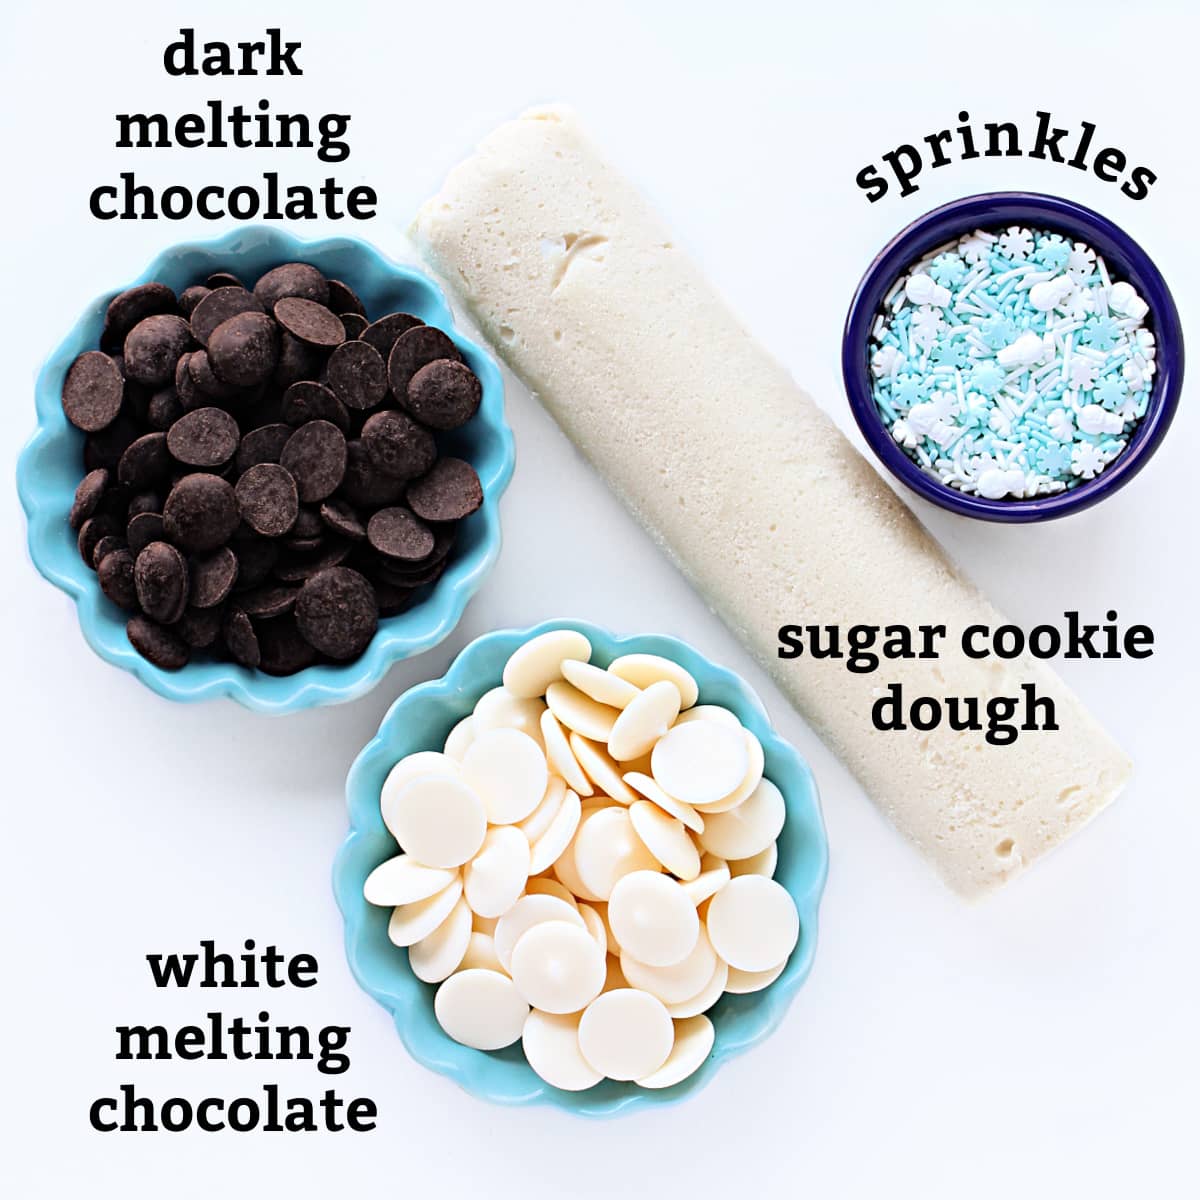 Ingredients labeled : dark melting chocolate, white melting chocolate, sprinkles, sugar cookie dough.